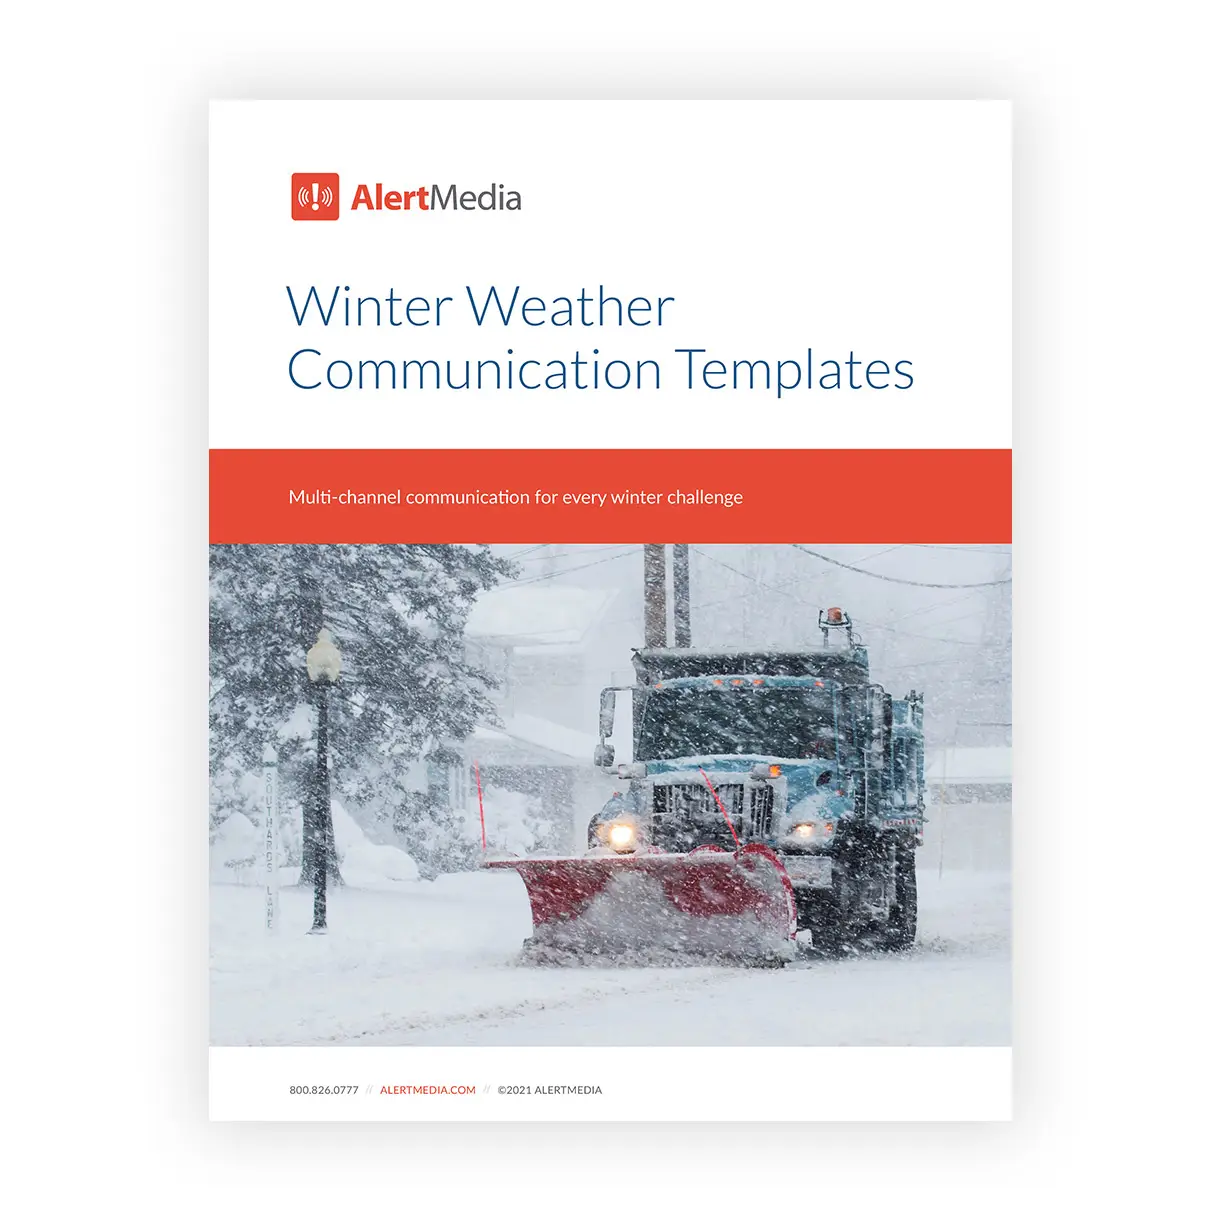 AM-IntroImage-WinterWeatherCommTemplates-Cover-1220x1220